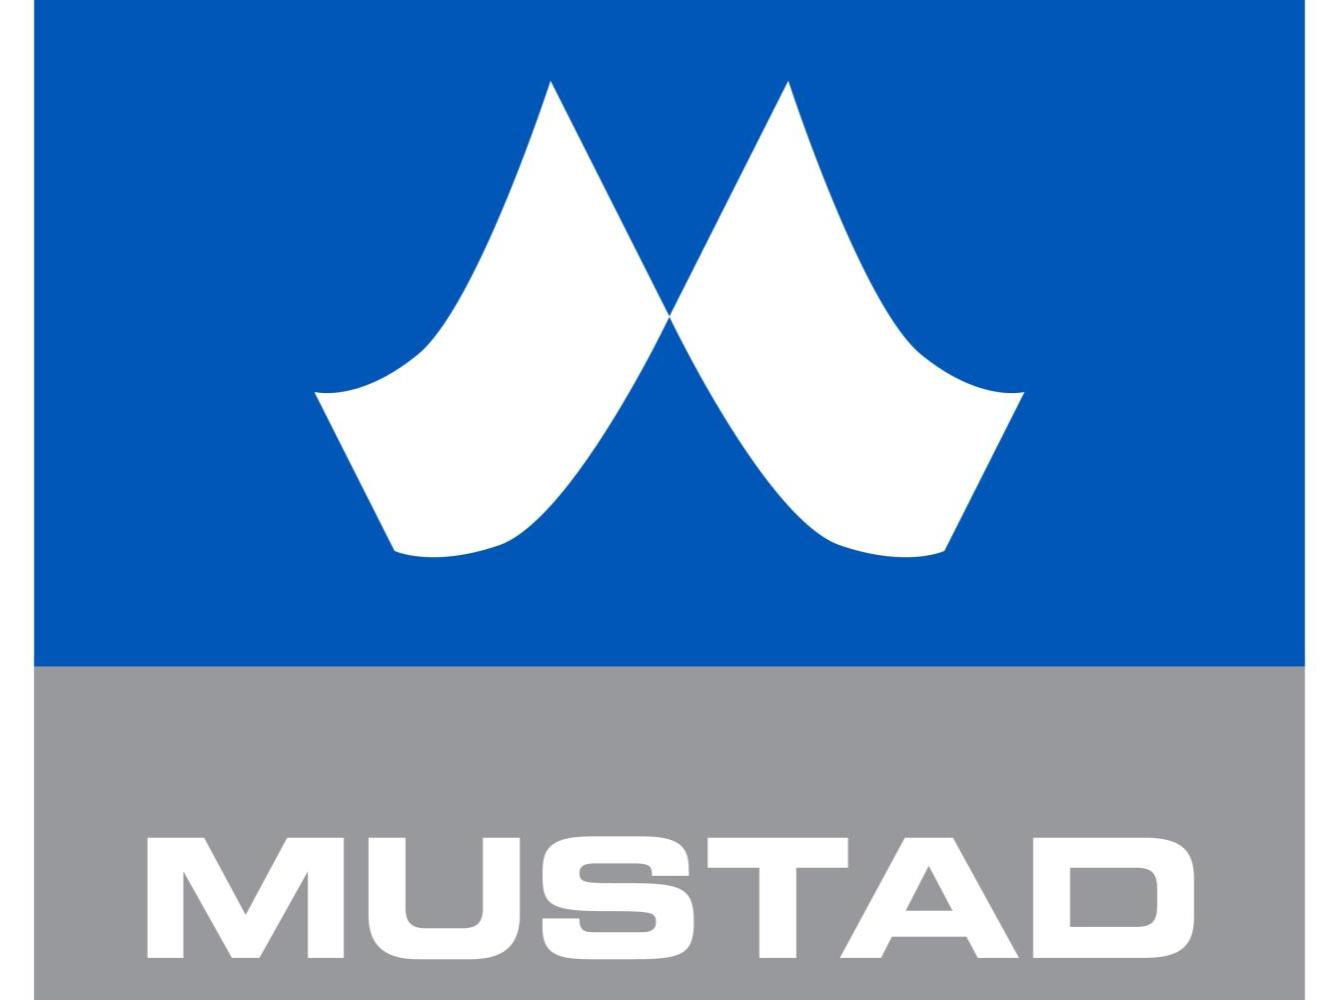 Mustad square logo 1